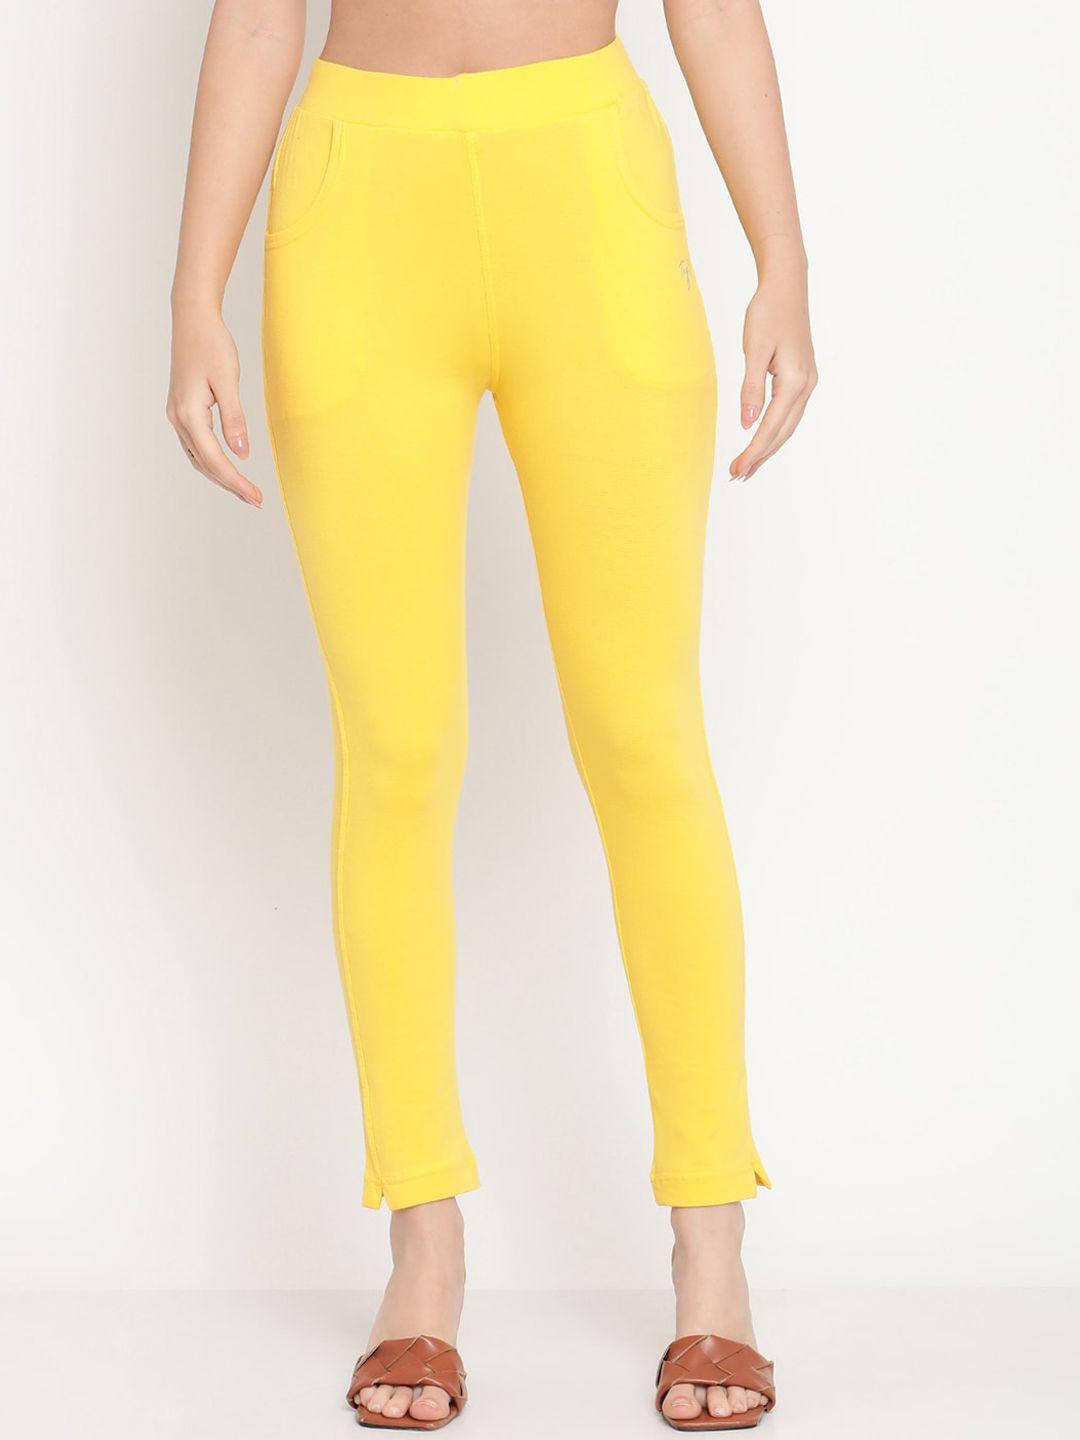 tag 7 women yellow solid leggings